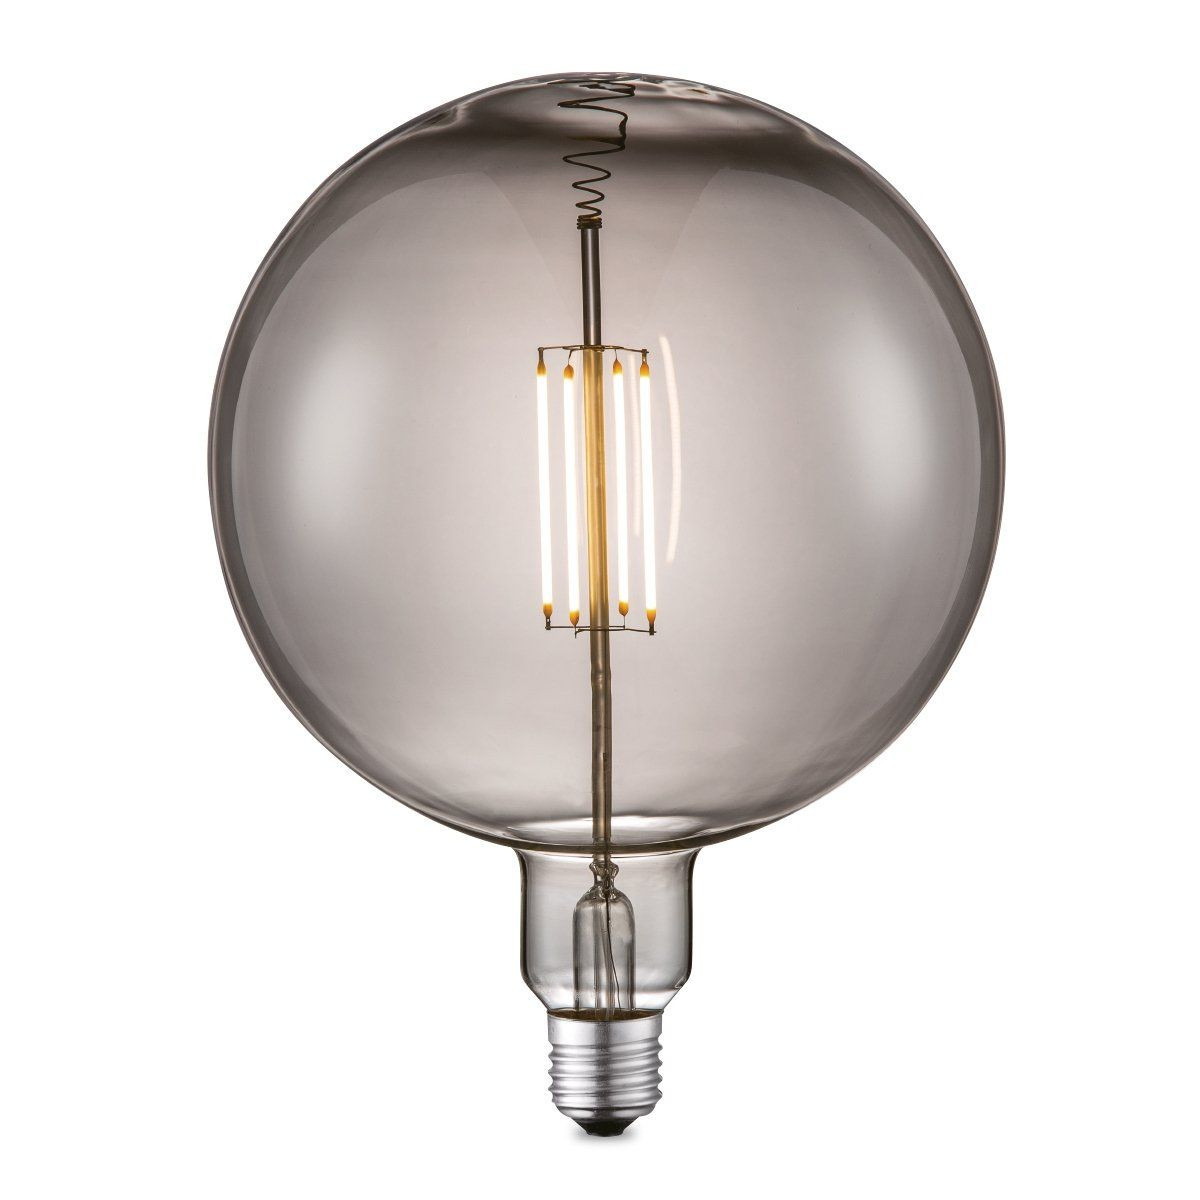 Edison Vintage LED lamp E27 LED filament lichtbron, Ovaal Carbon G180, 18/18/23cm, Rook, Retro LED lamp Dimbaar, 4W 120lm 1800K, warm wit licht, geschikt voor E27 fitting